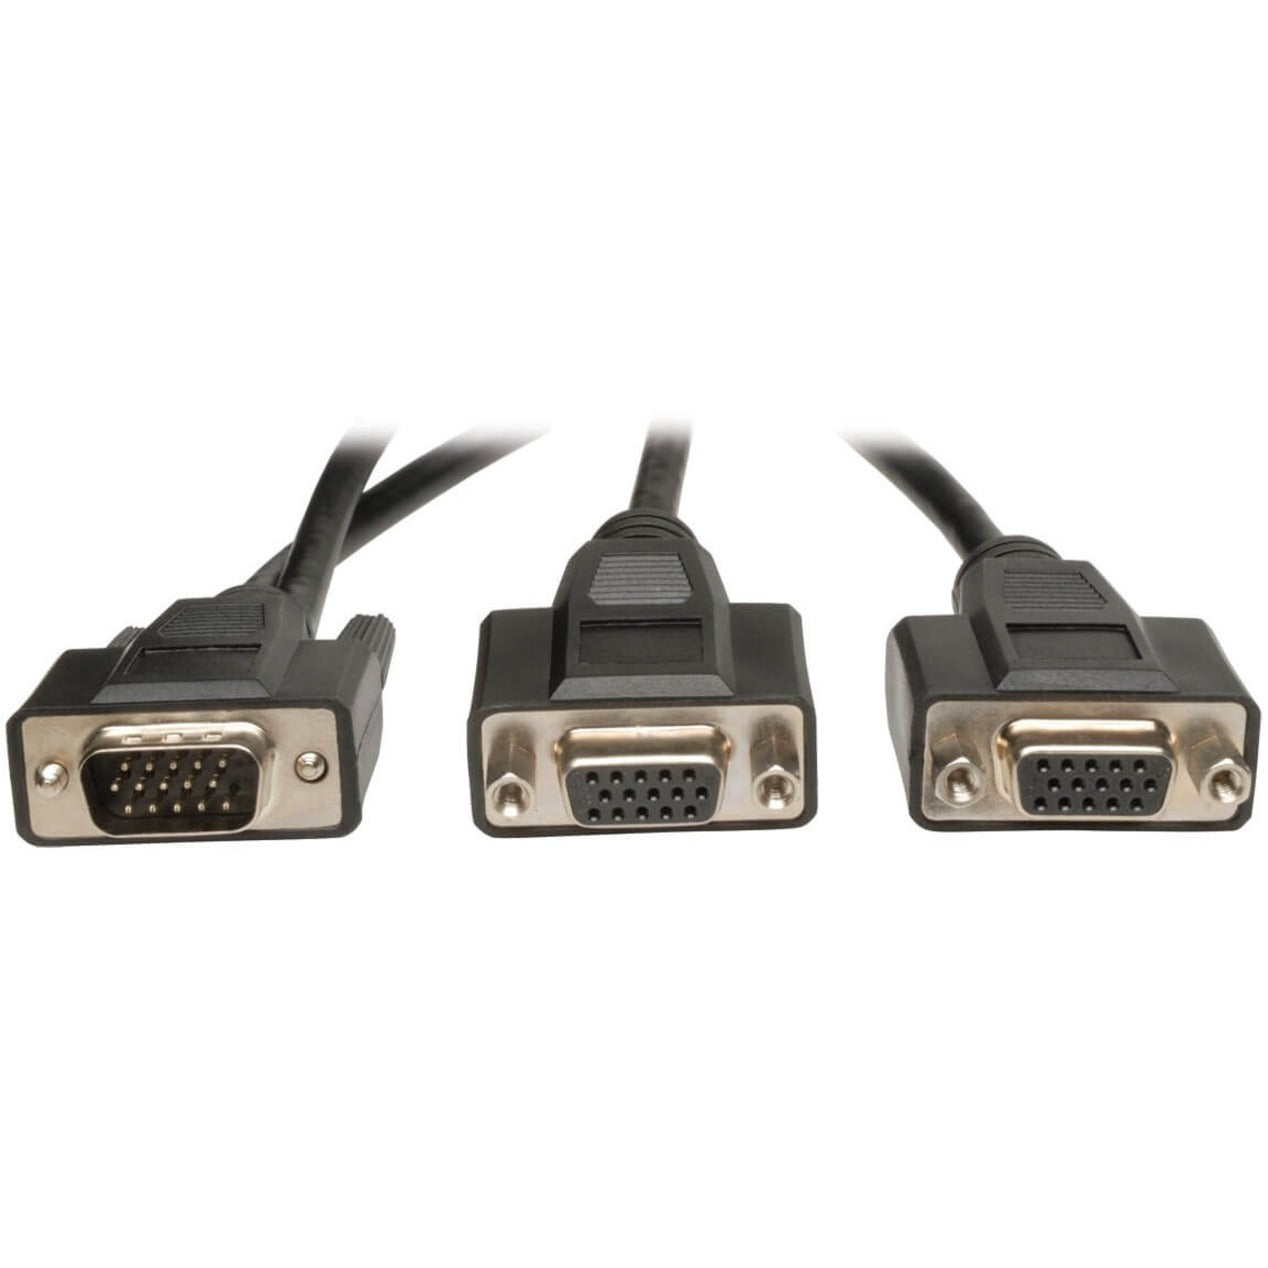 Tripp Lite P516-001-HR SXGA/UXGA Hi-Resolution Y-Cable, Splitter Cable for High Resolution Monitors